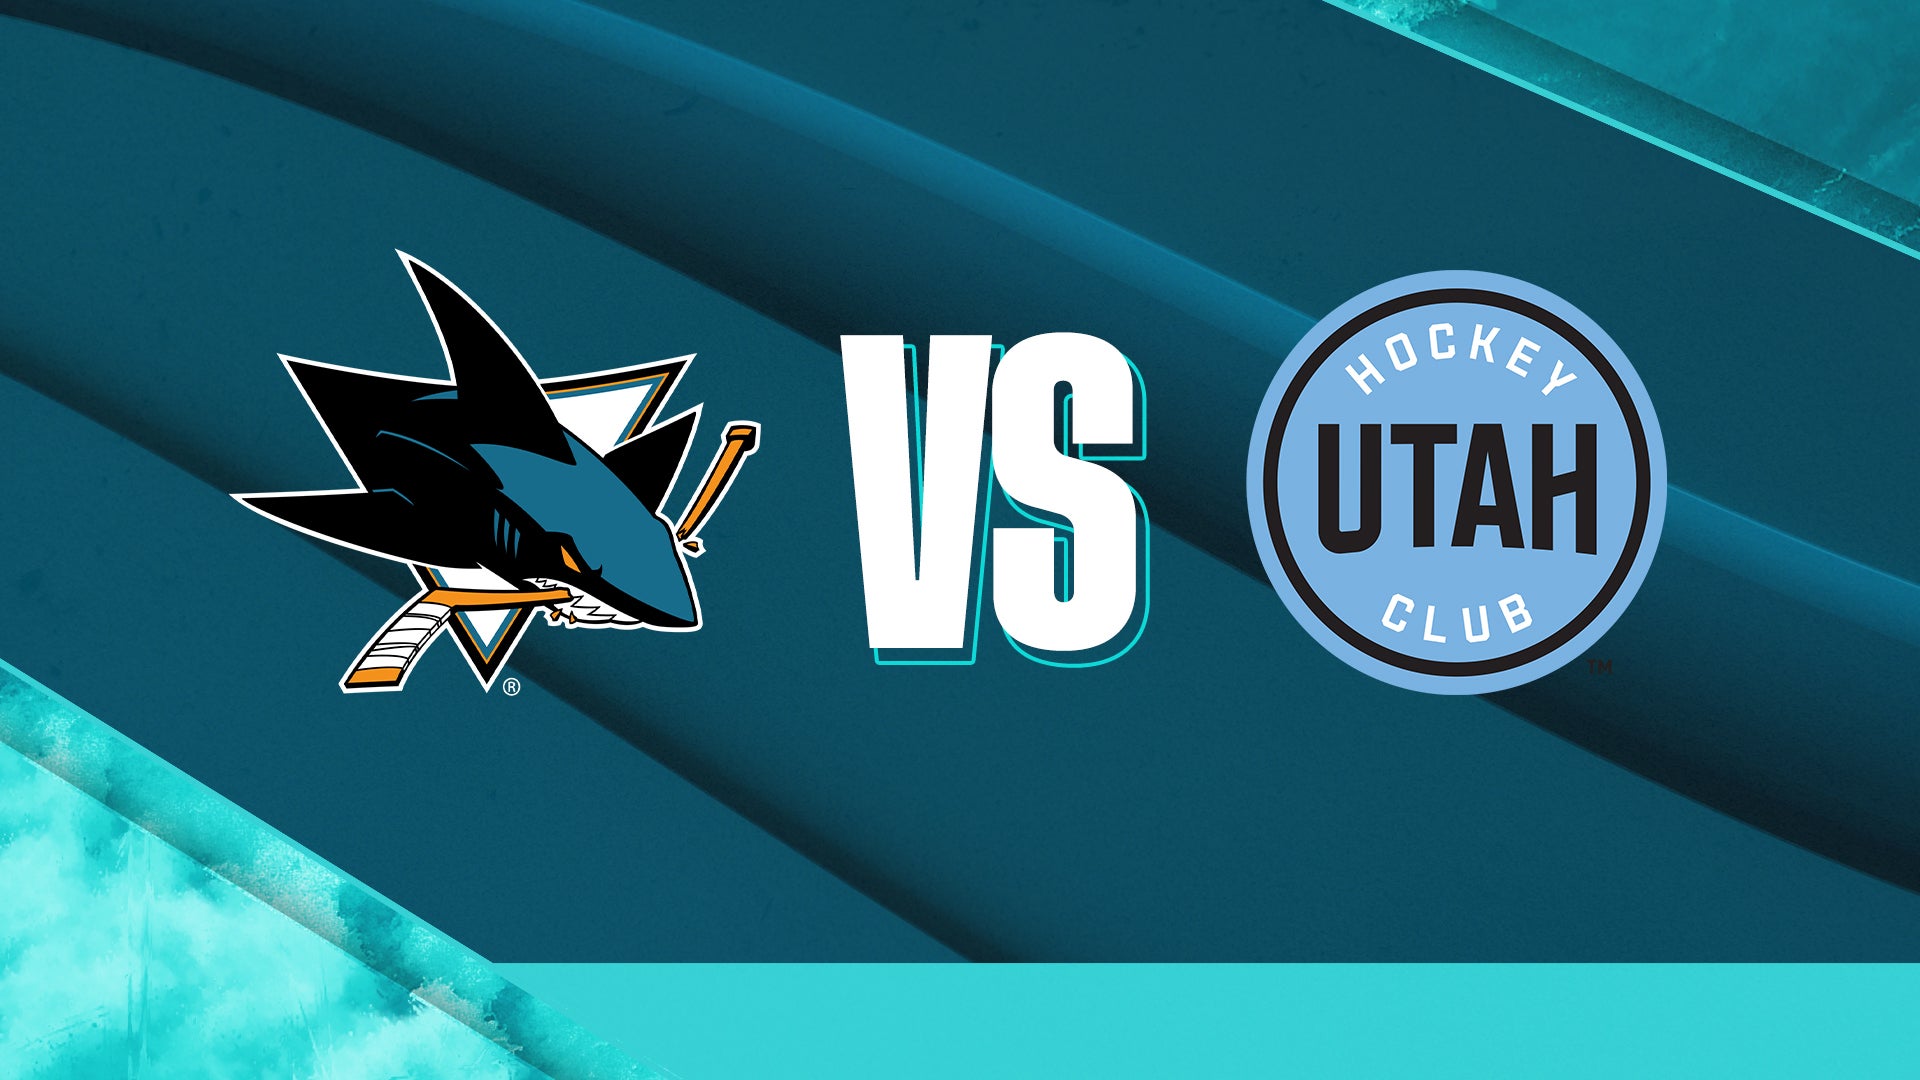 More Info for San Jose Sharks vs. Utah Hockey Club